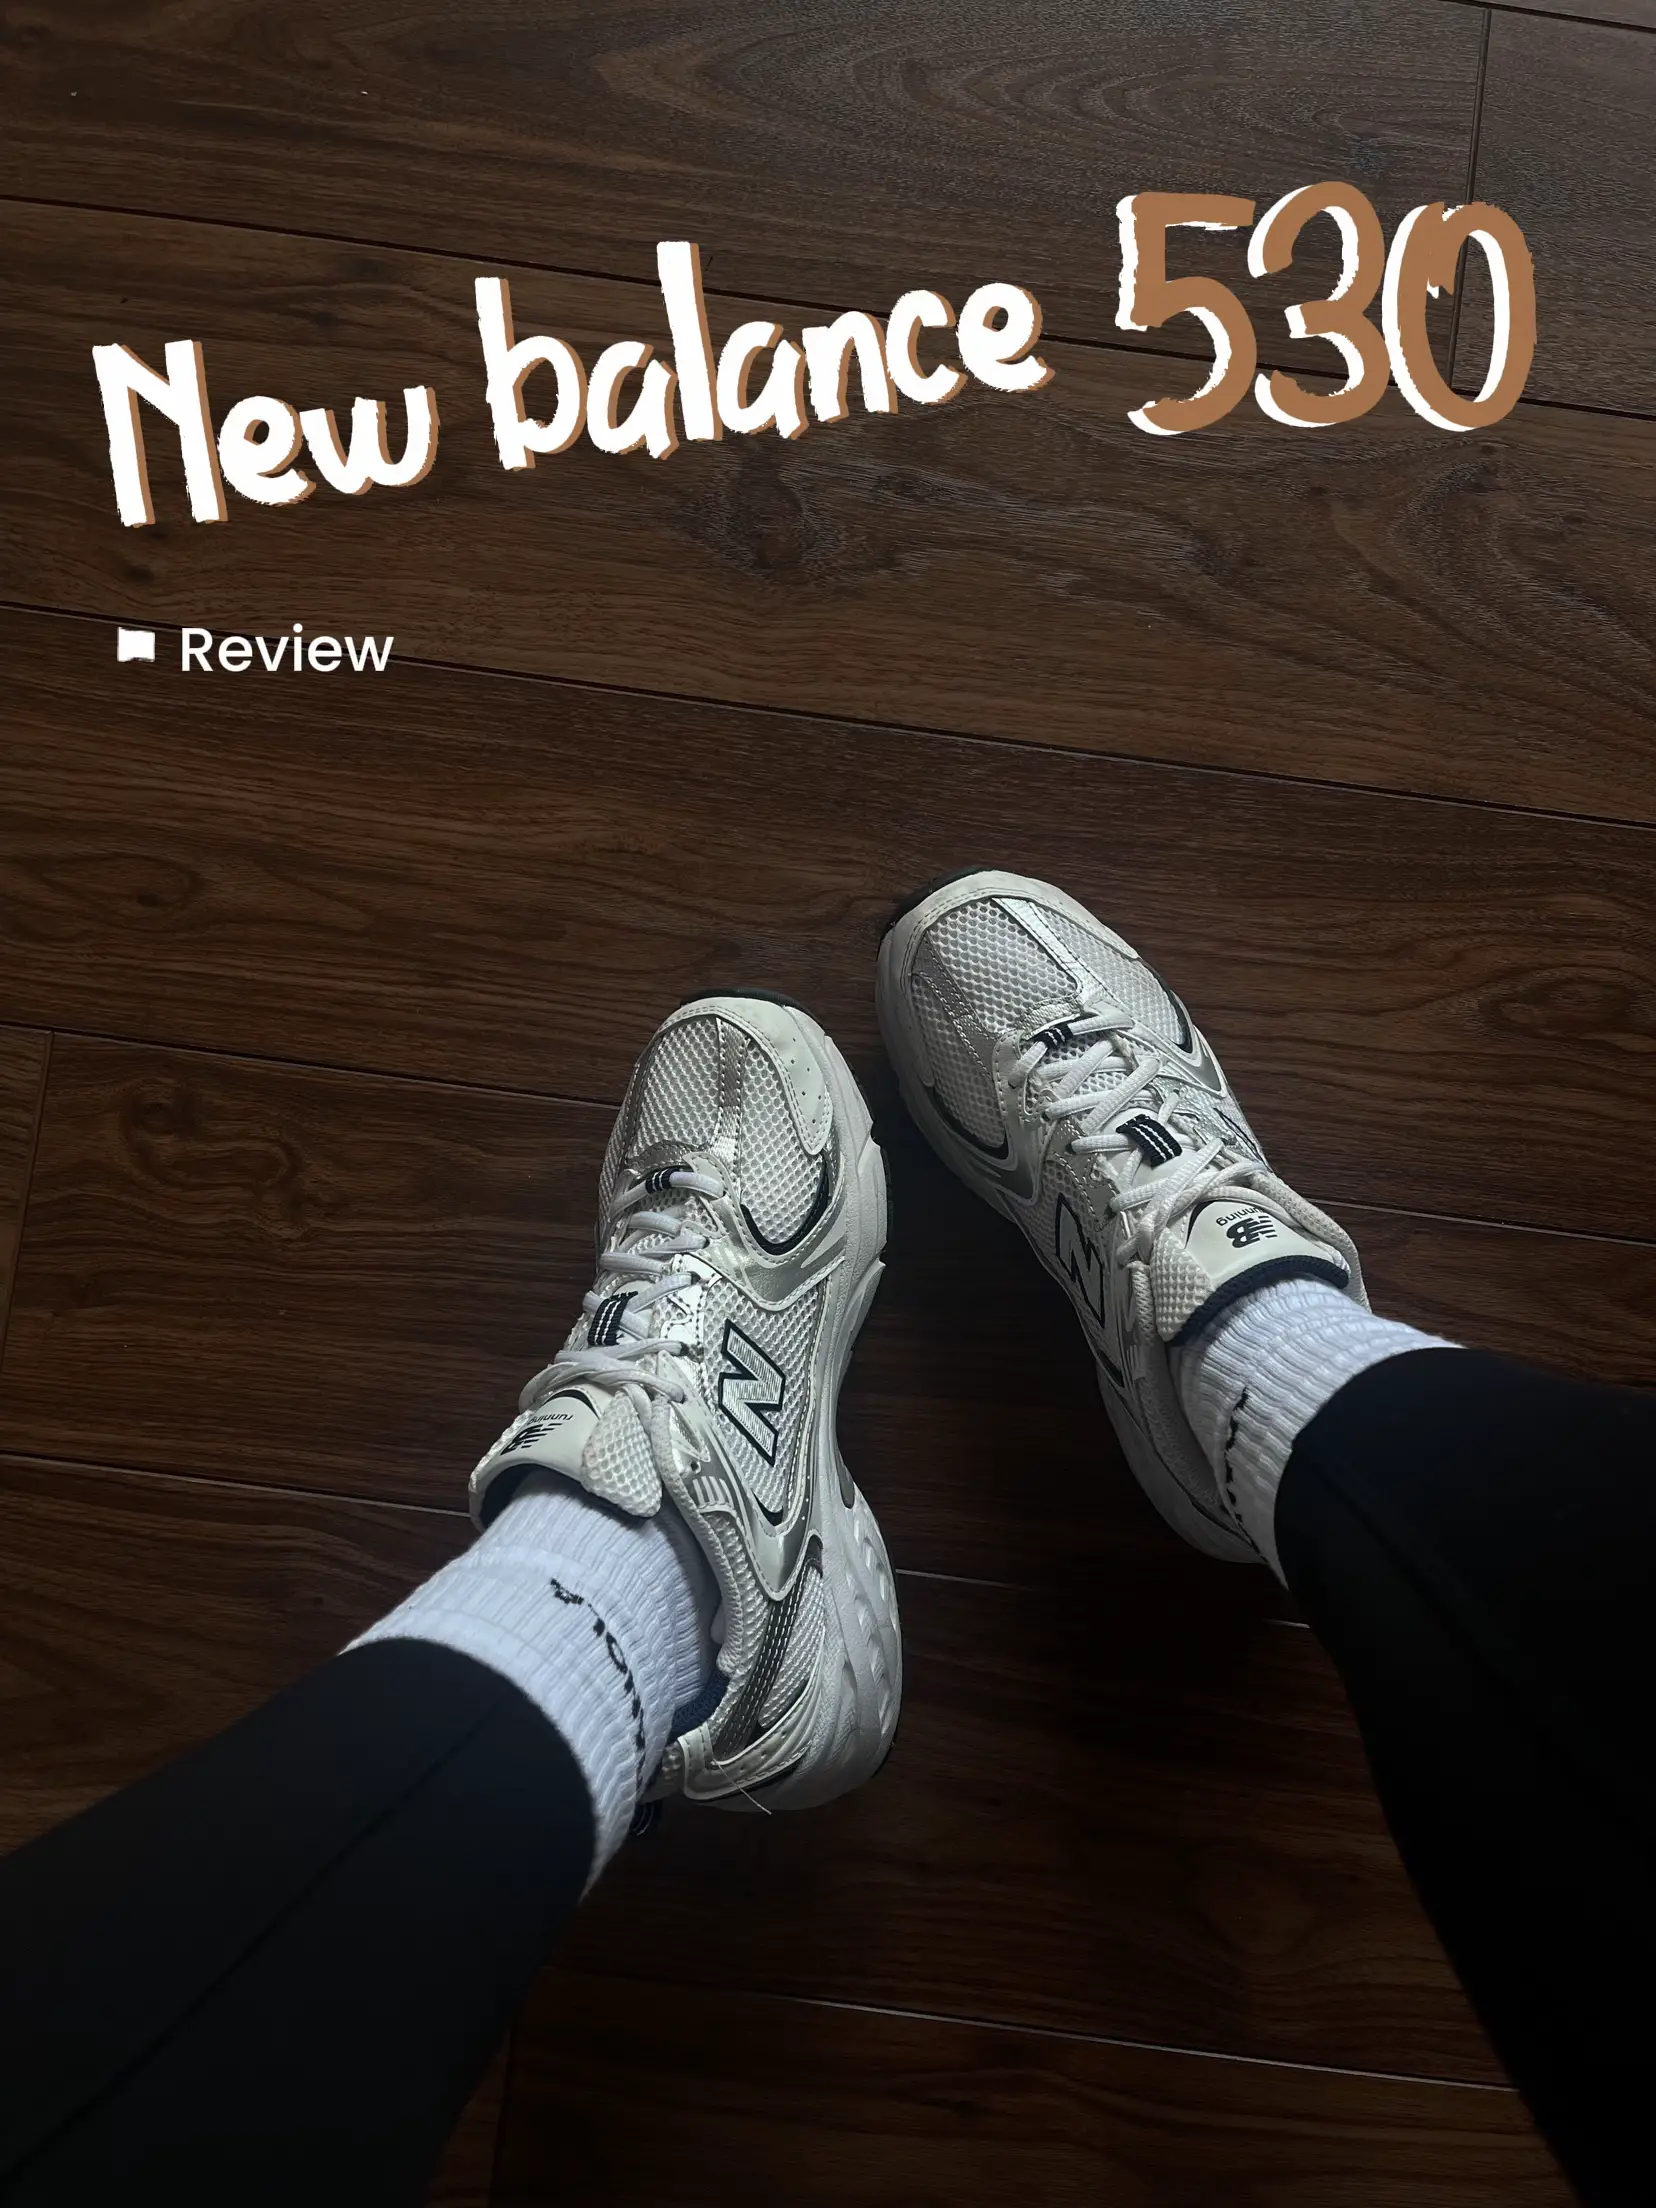 New Balance 530 | product review | Kavveetaが投稿したフォトブック